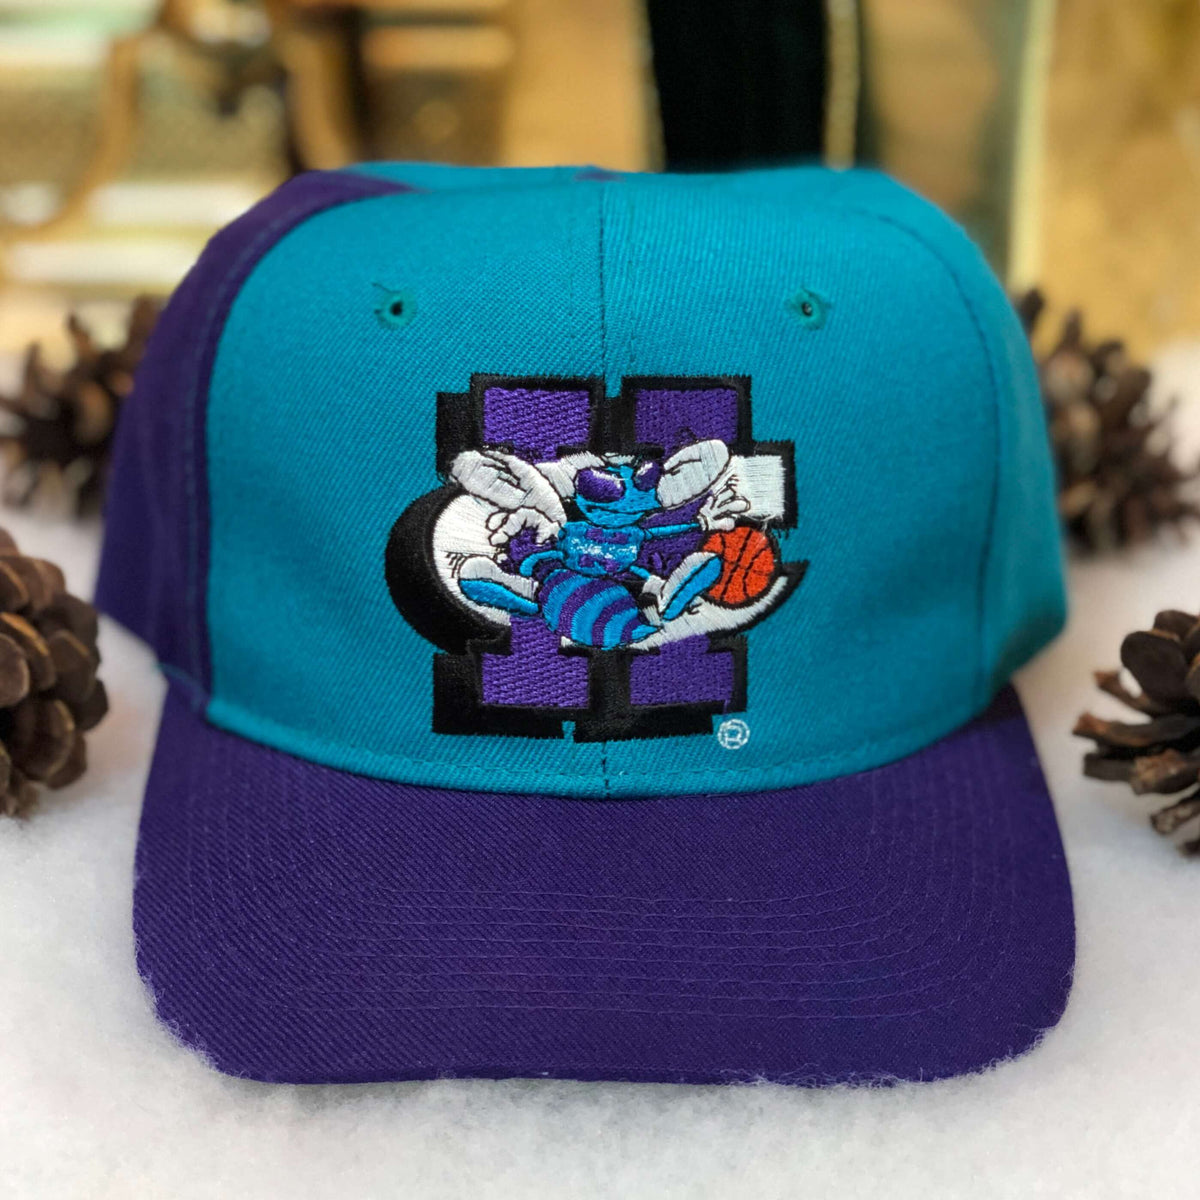 Charlotte Hornets Sports Specialties Script Hat